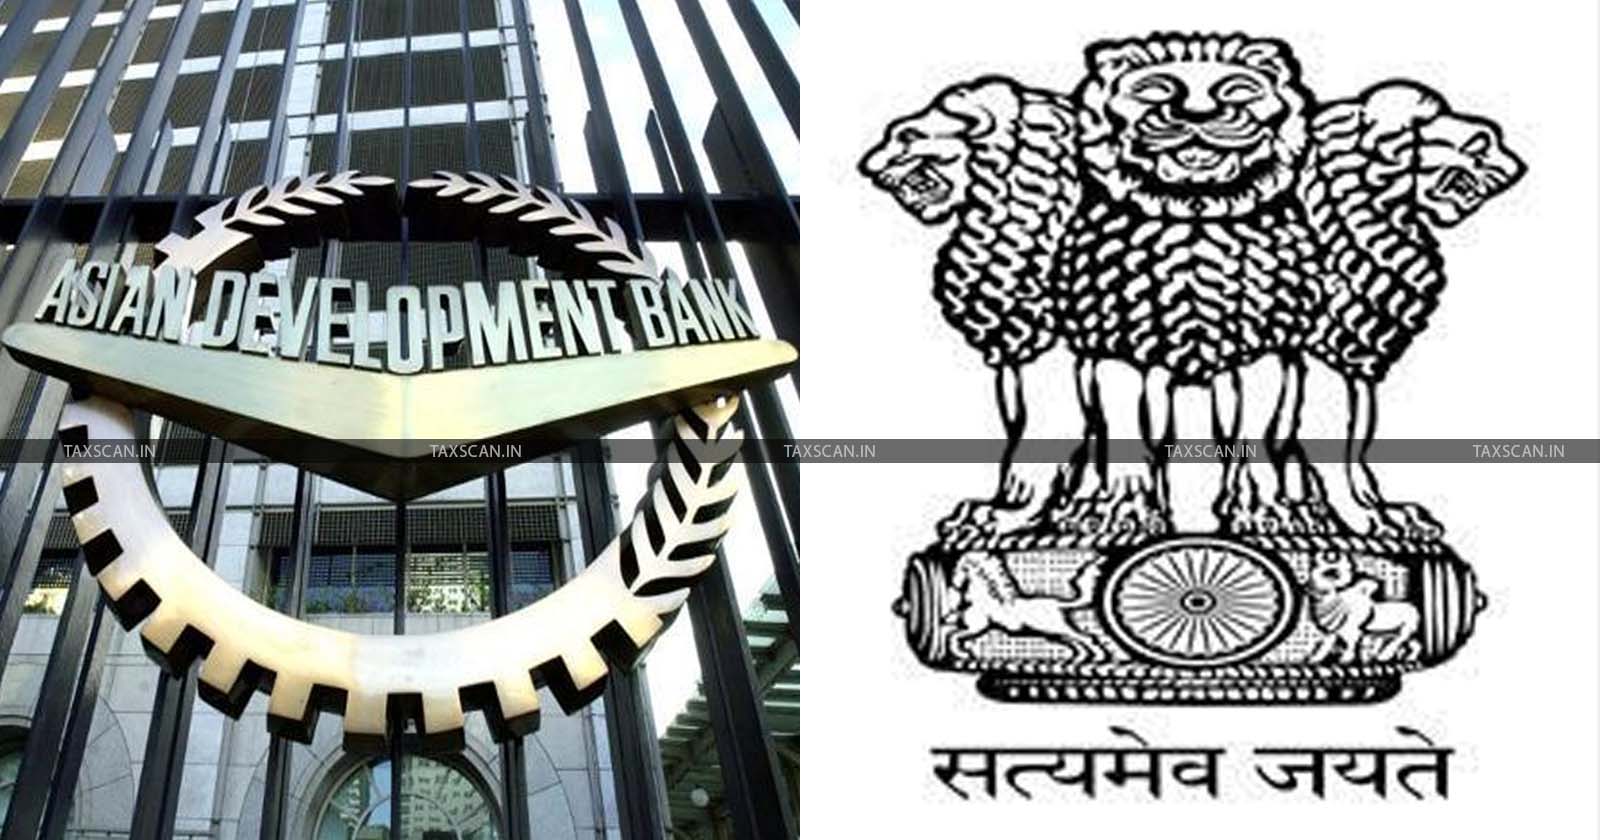 Government of India - ADB -Asian Development Bank - TAXSCAN